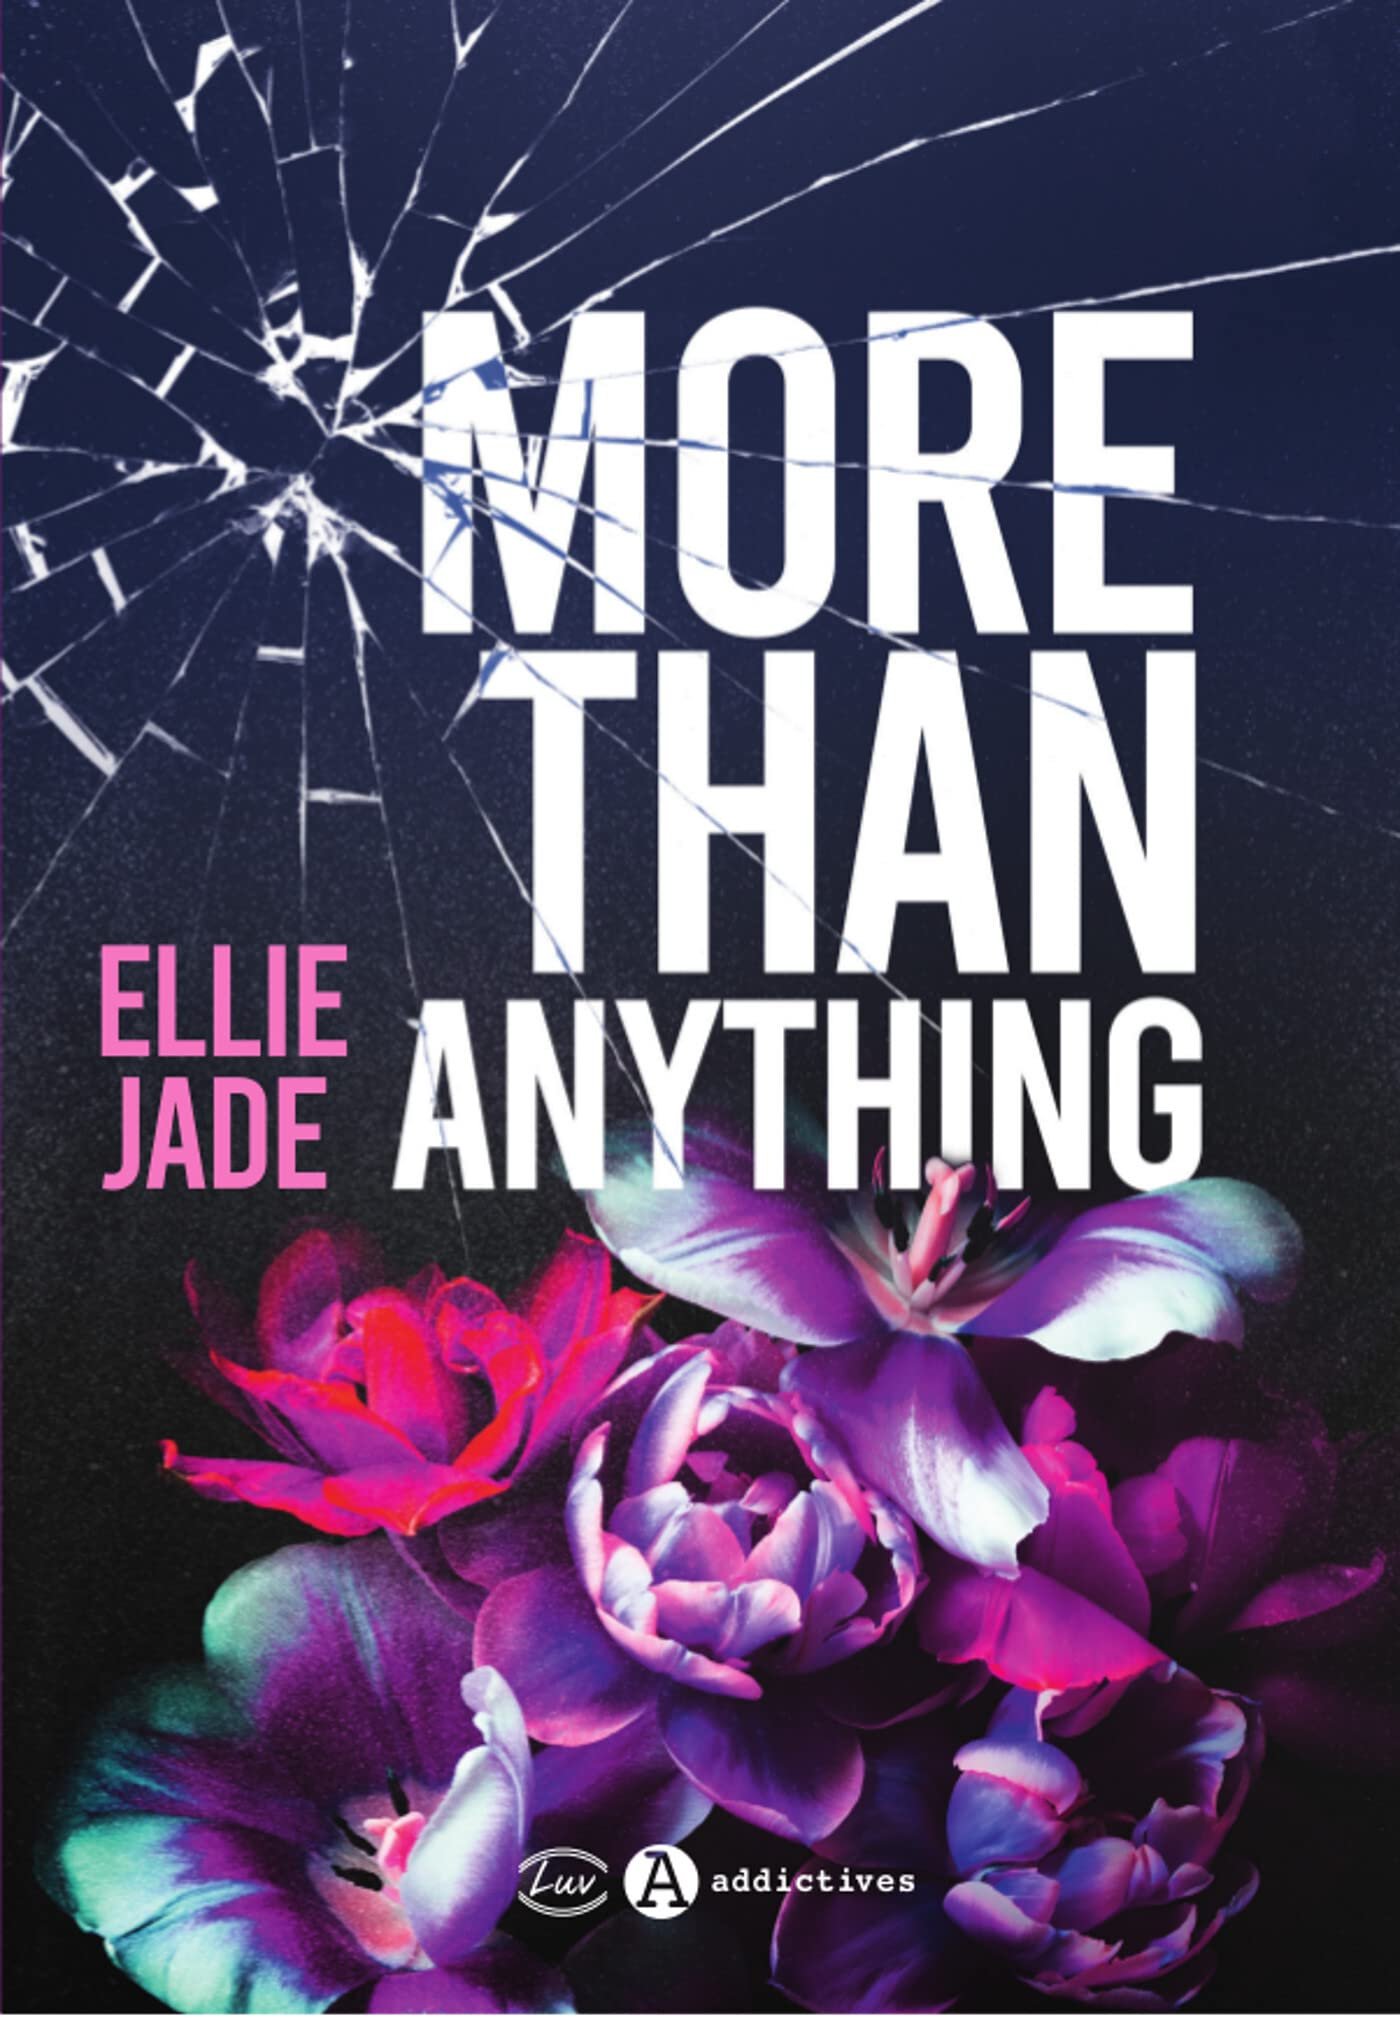 Ellie Jade – More than Anything